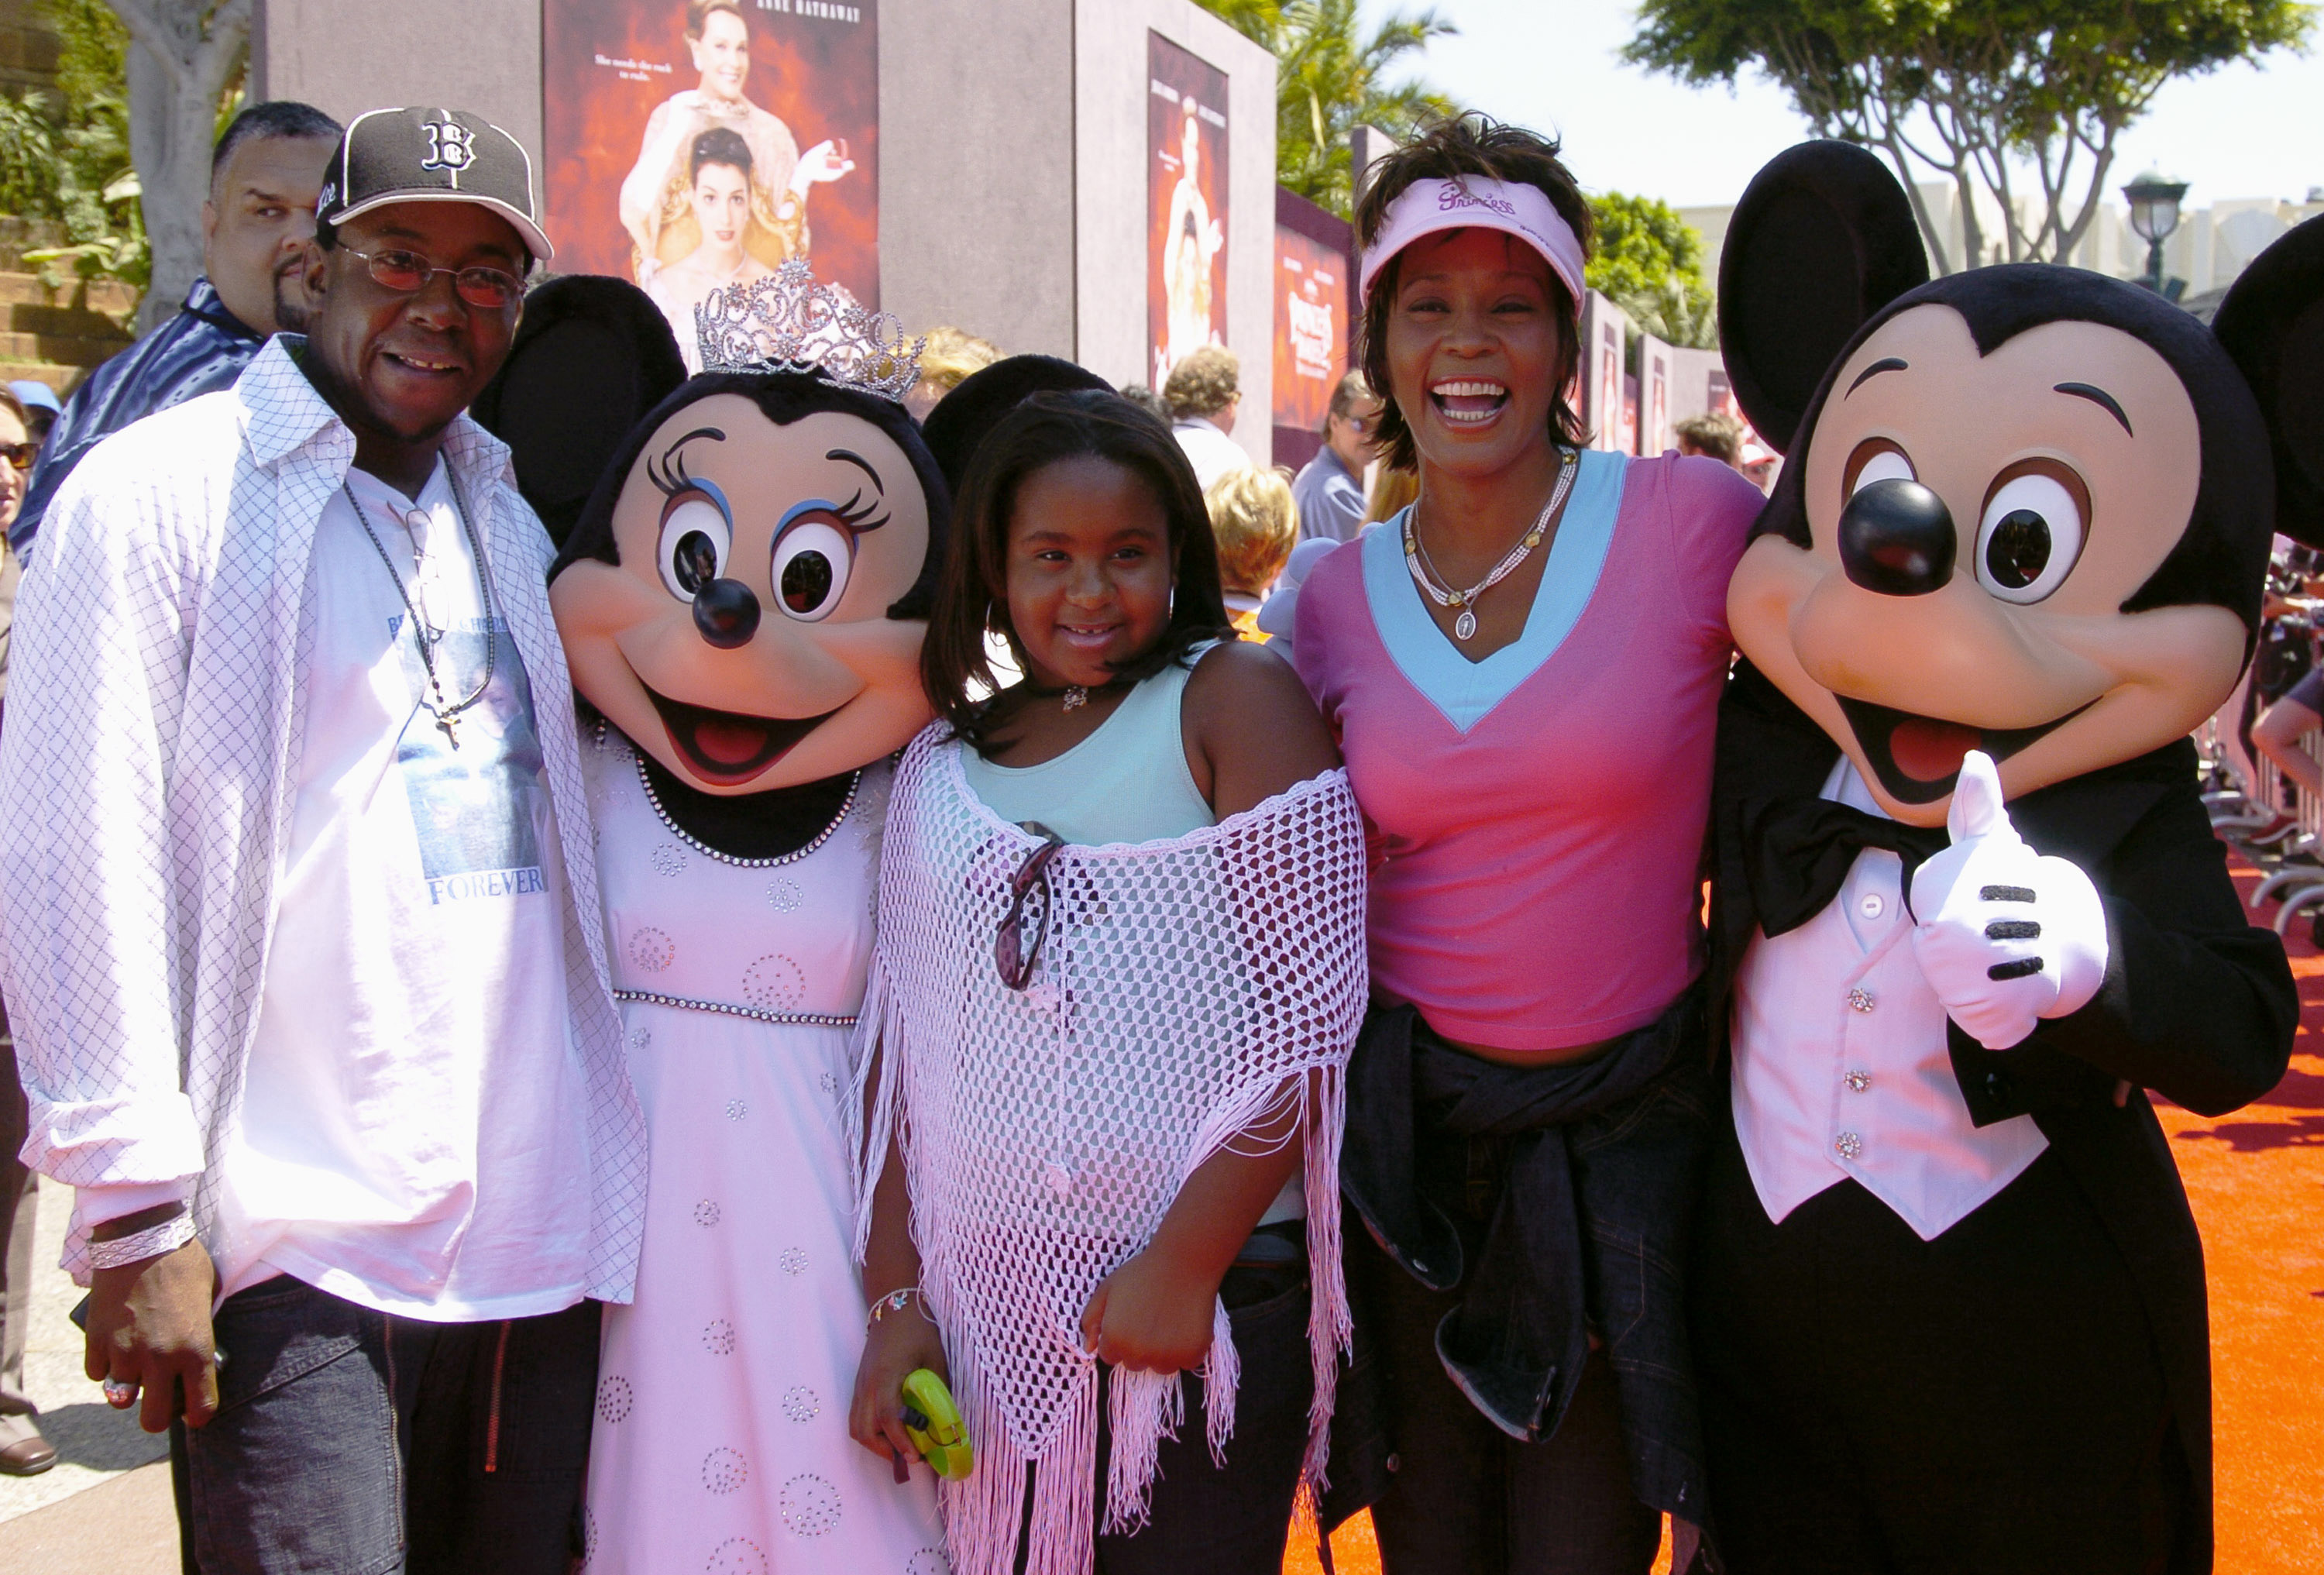 Bobby Brown, Bobbi Kristina Brown, and Whitney Houston smiling at DisneyLand resort.